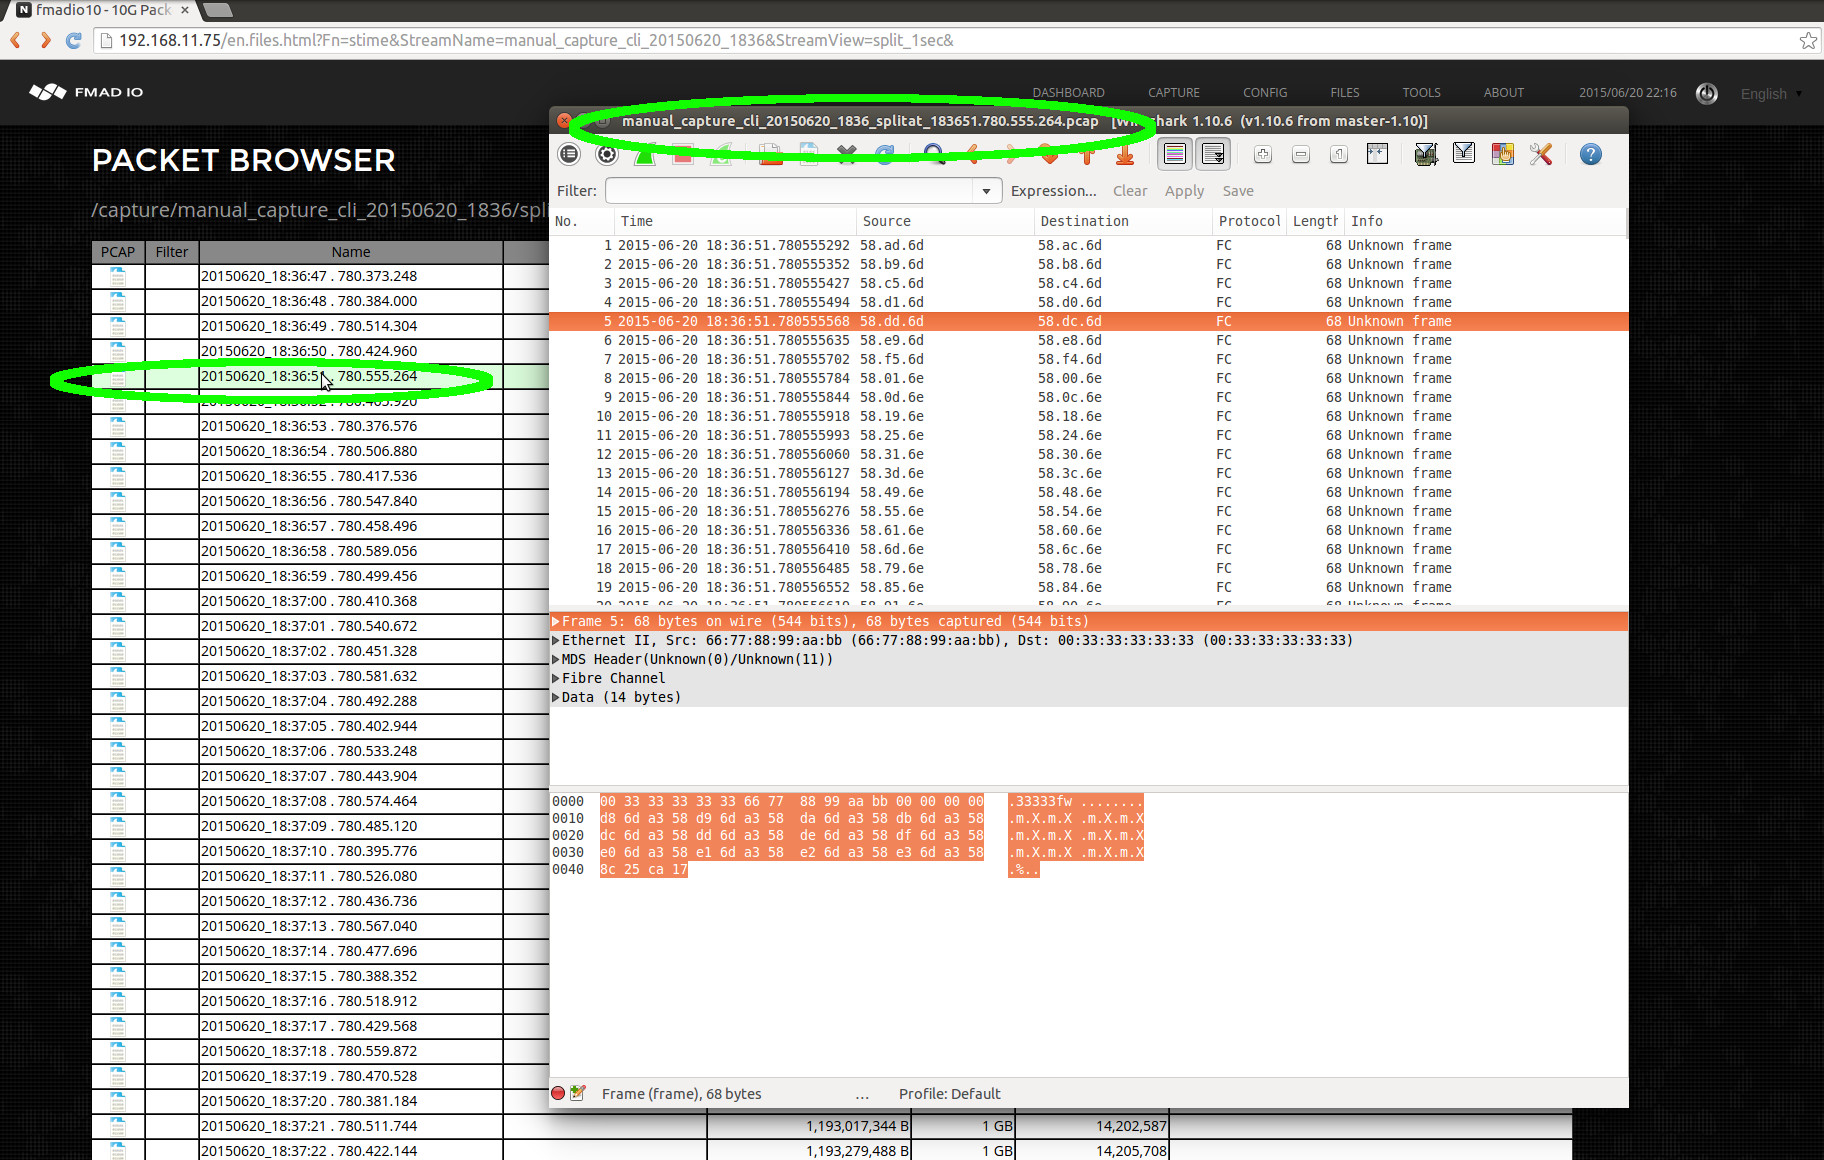 10g packet capture manual PCAP download split 1sec download wireshark